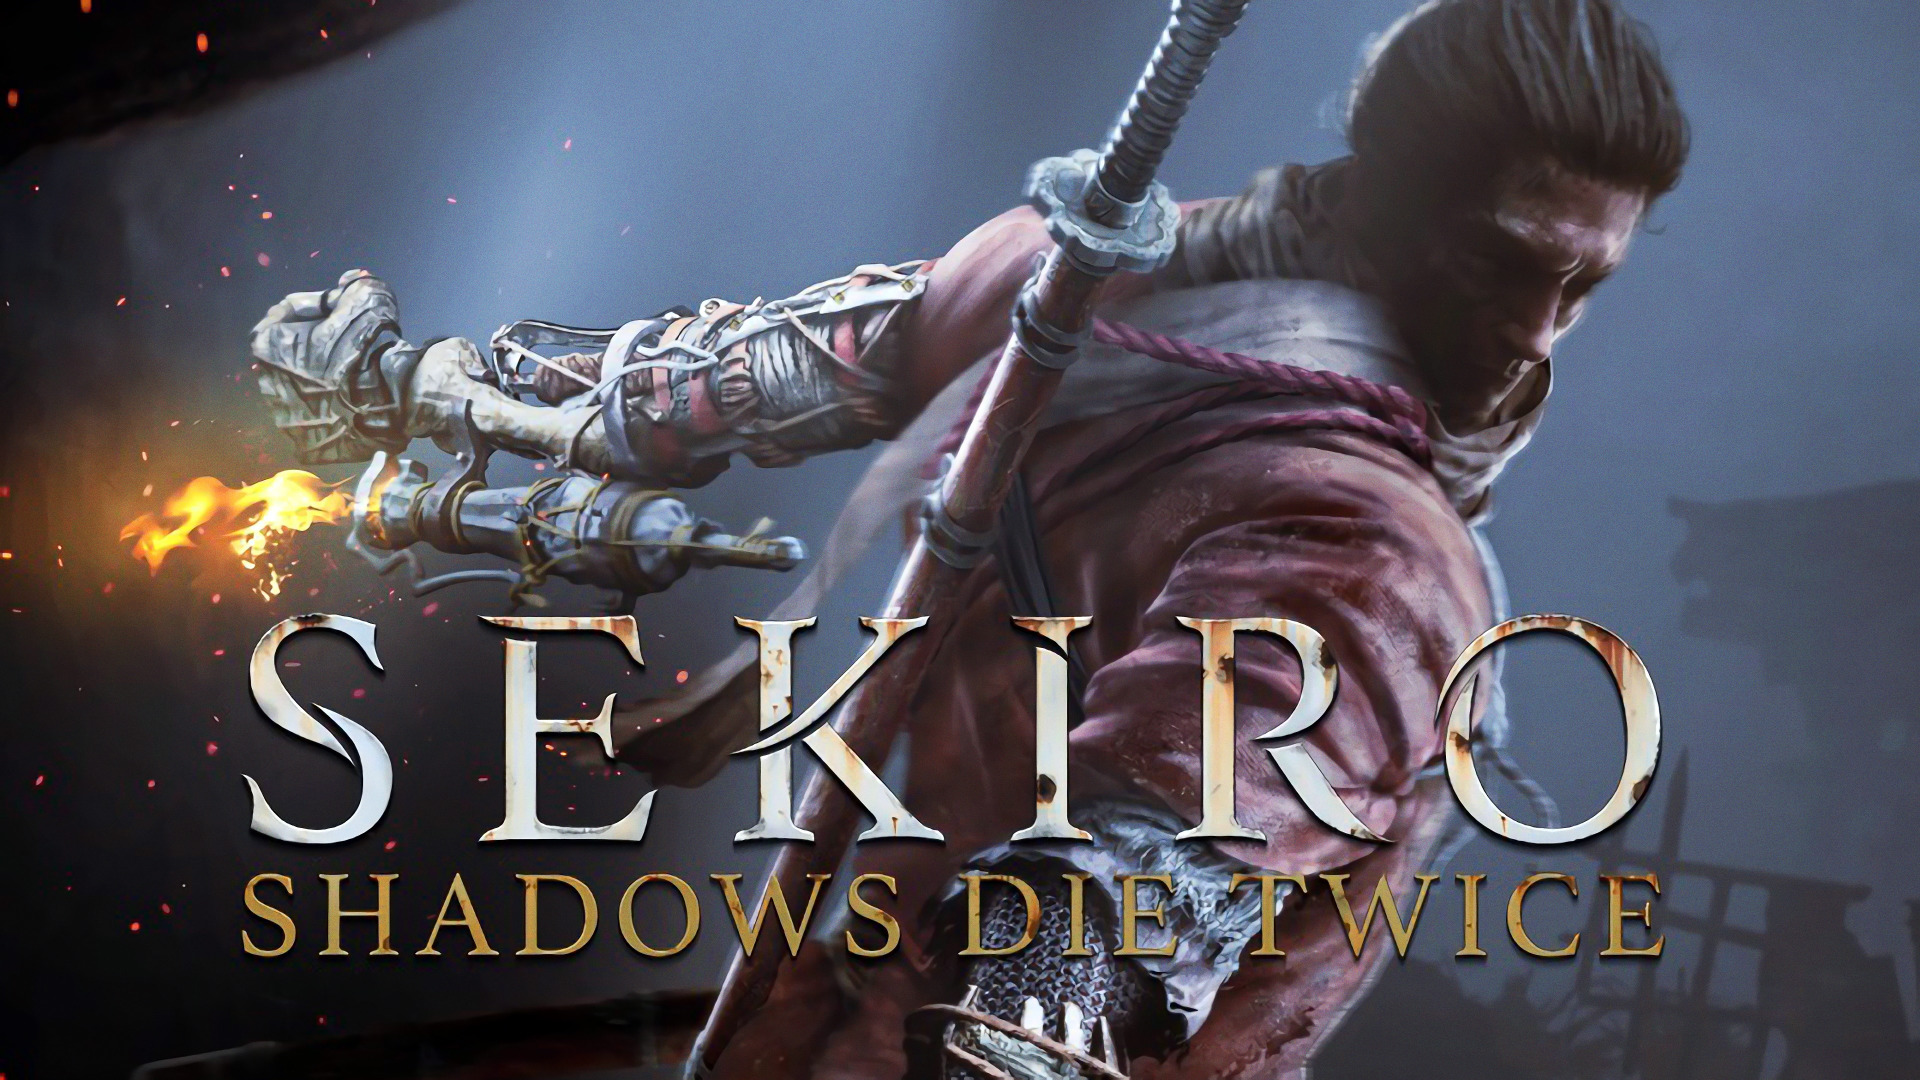 Game PS4 - Sekiro: Shadows Die Twice 